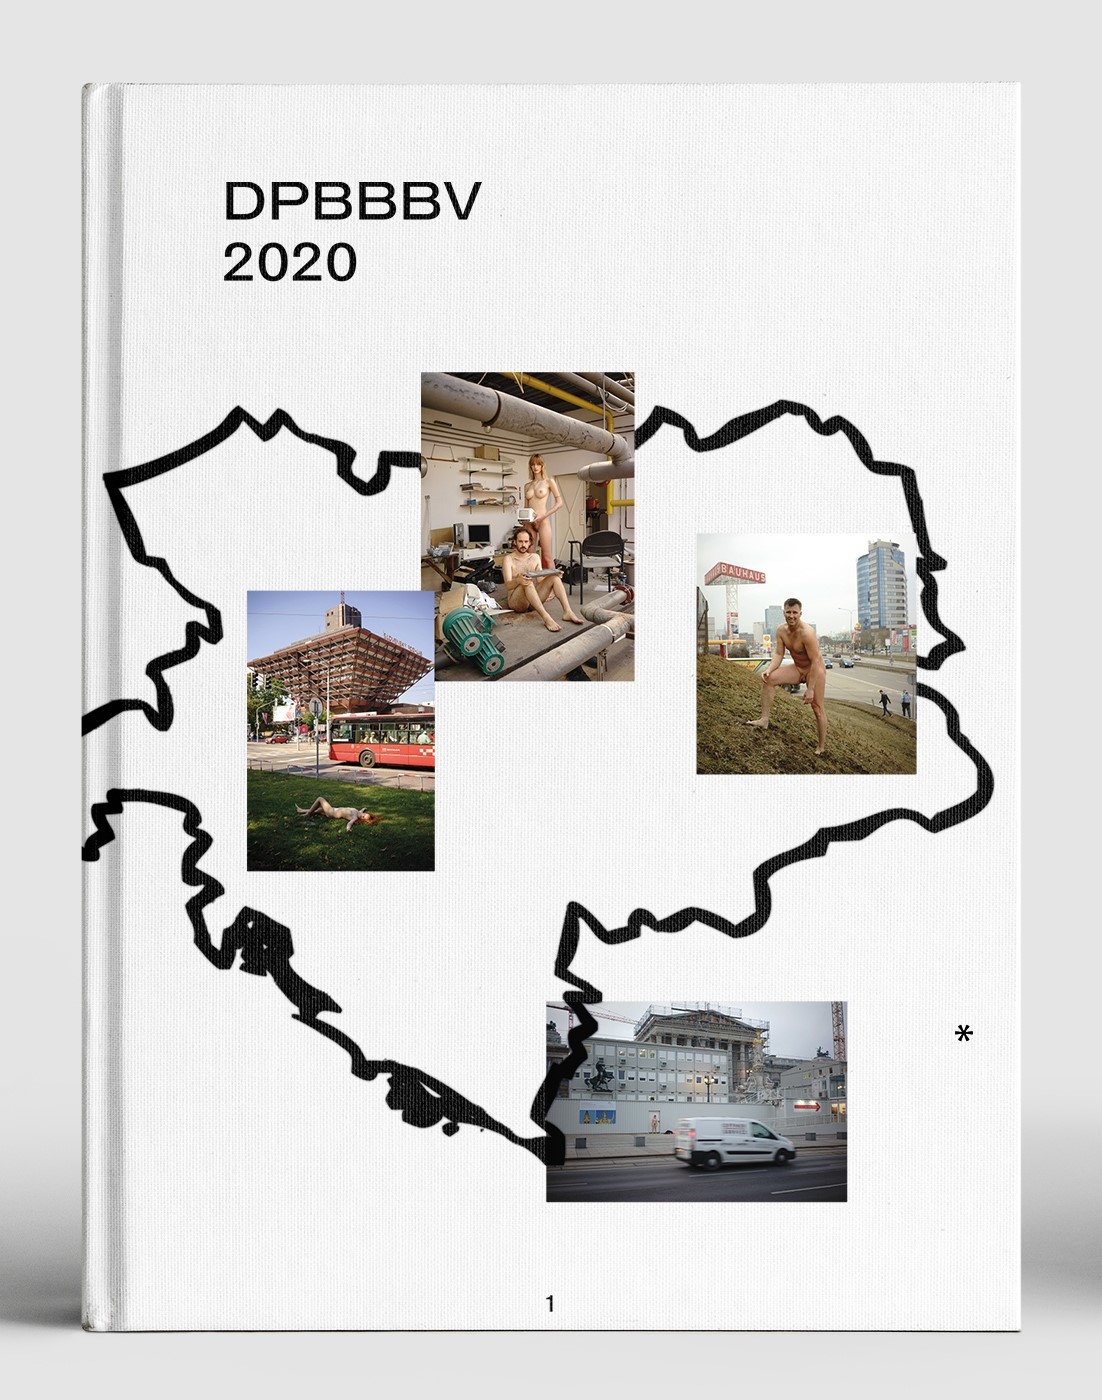 Daily Portrait Brno – Bratislava – Budapest – Vienna 2020 (DPBBBV 2020)